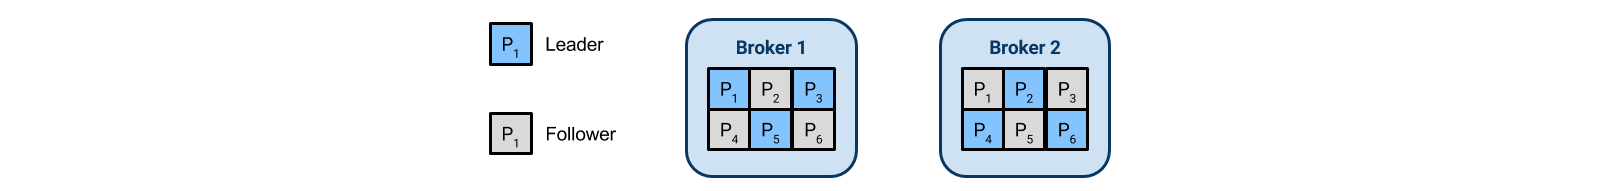 Two-broker Kafka cluster